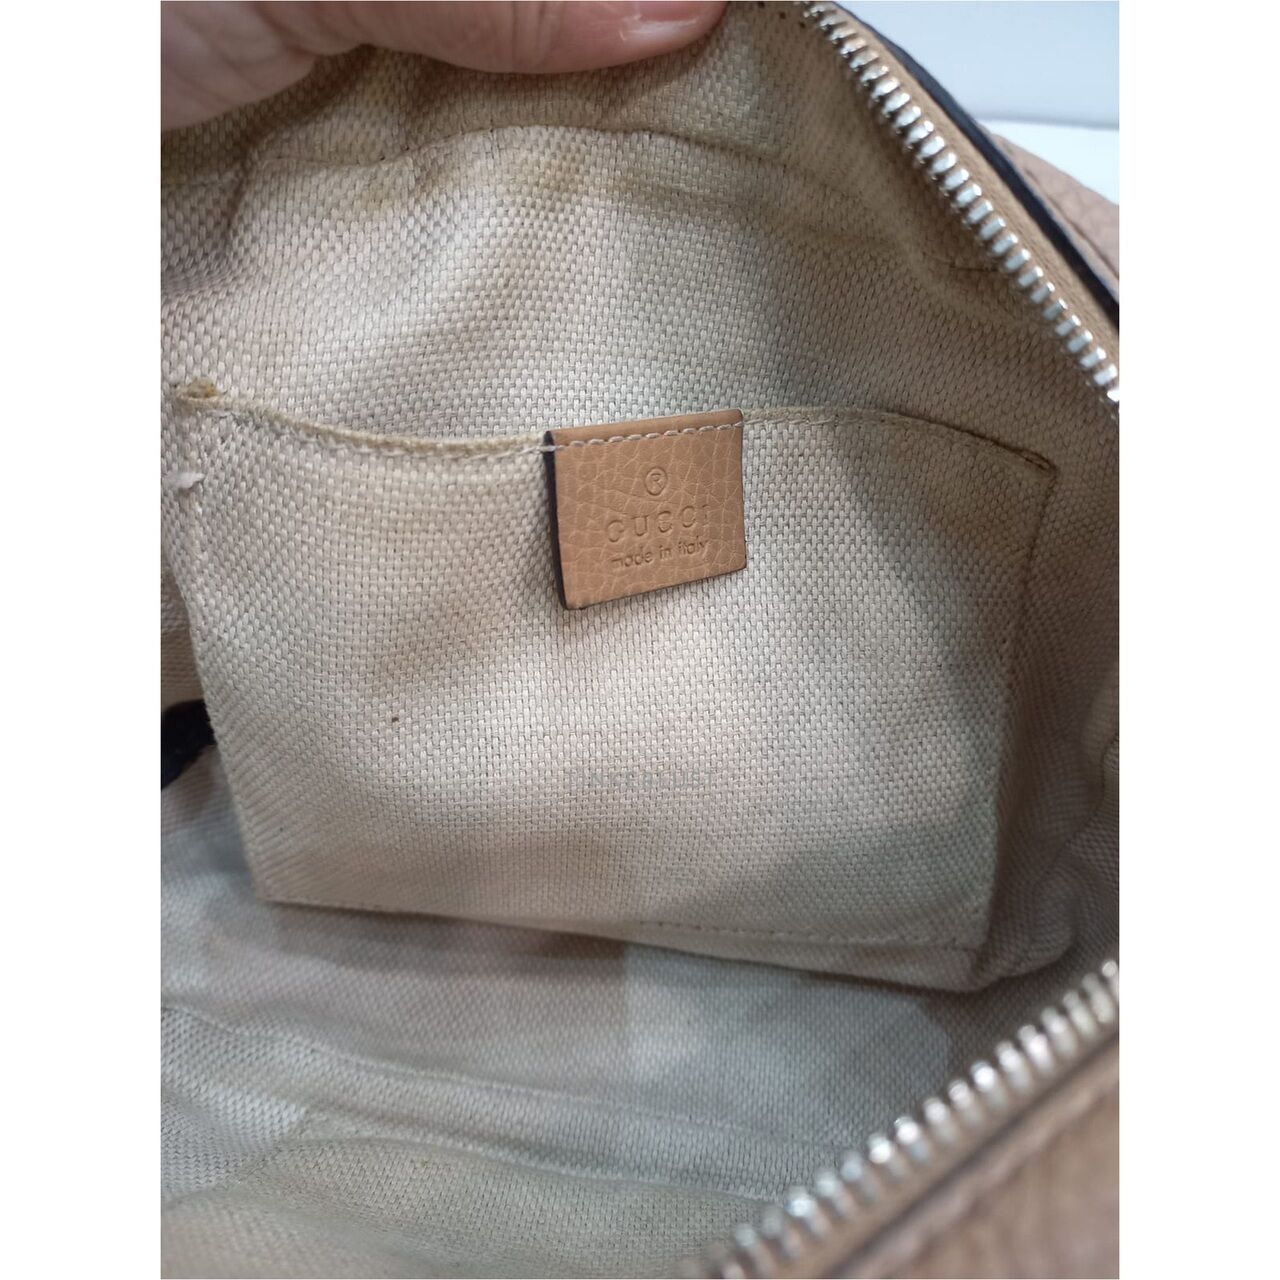 Gucci Soho Camera Bag Leather Nude GHW Sling Bag